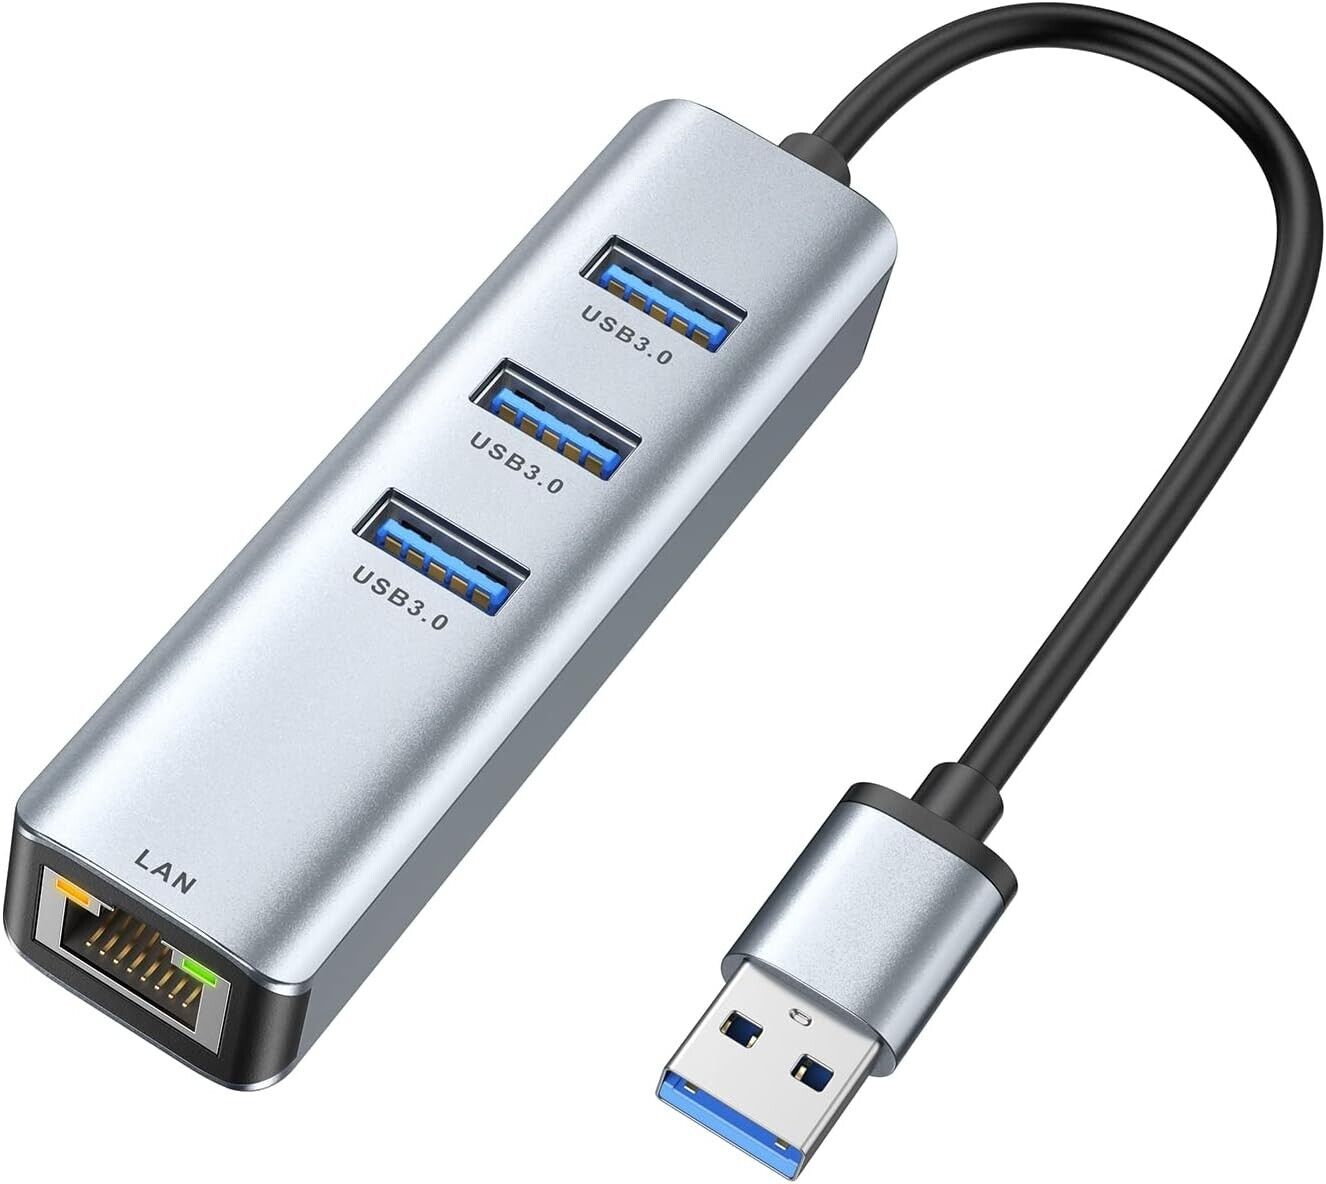 USB 3.0 to Ethernet Adapter 3-Port USB 3.0 Hub with RJ45 Gigabit Ethernet Adapte